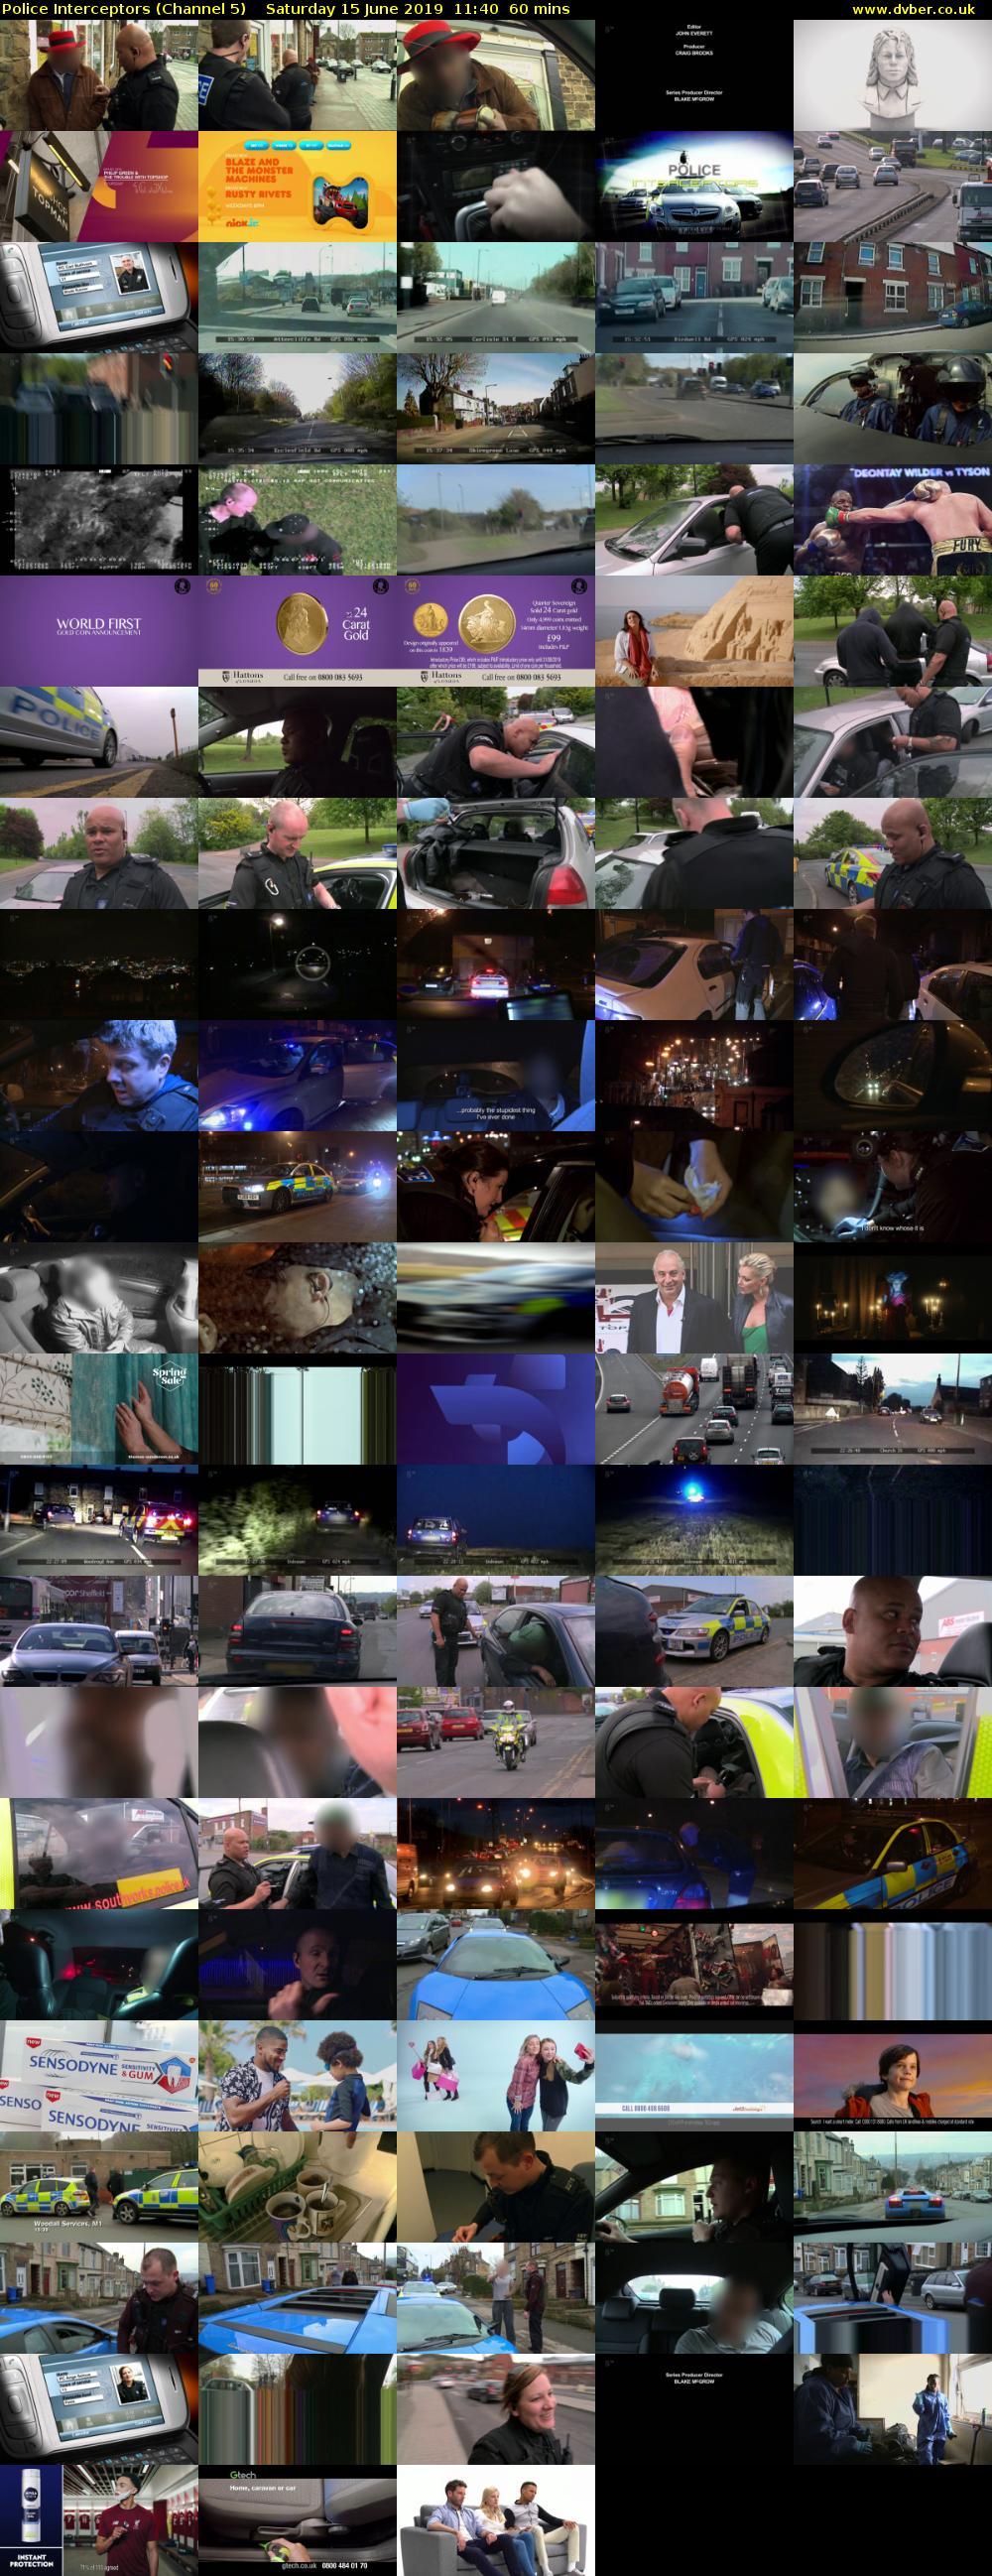 Police Interceptors (Channel 5) Saturday 15 June 2019 11:40 - 12:40